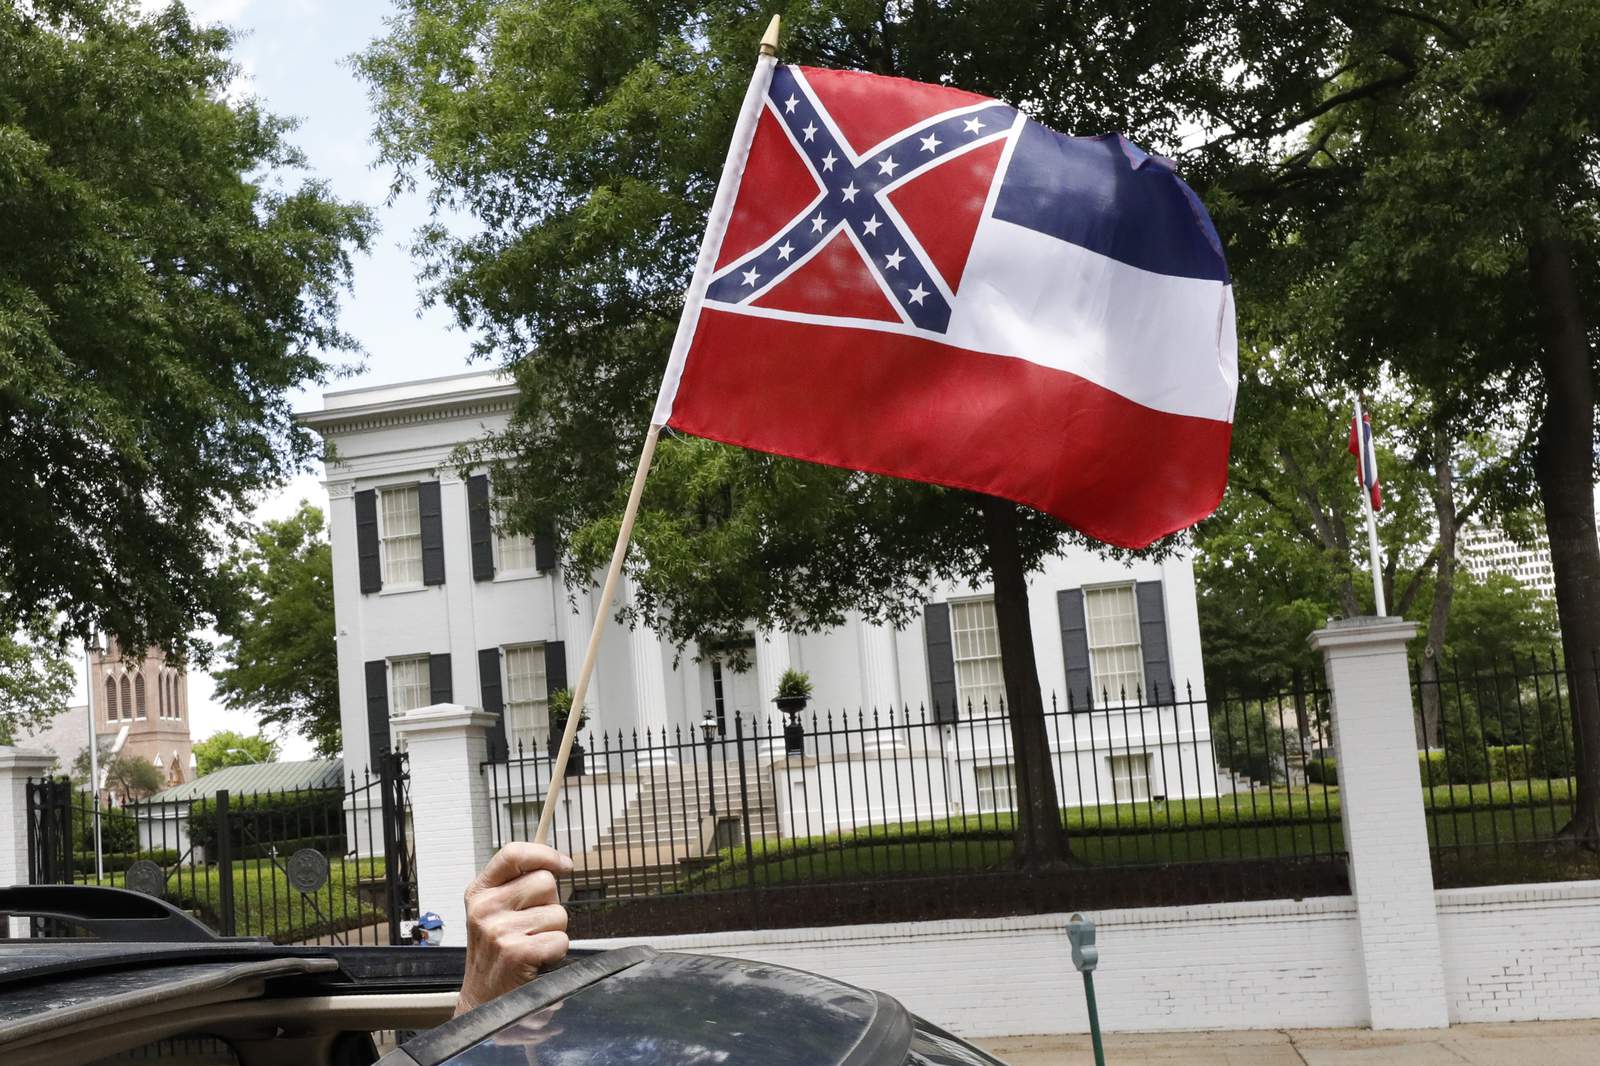 Mississippi flag: 'In God We Trust' for Confederate symbol?